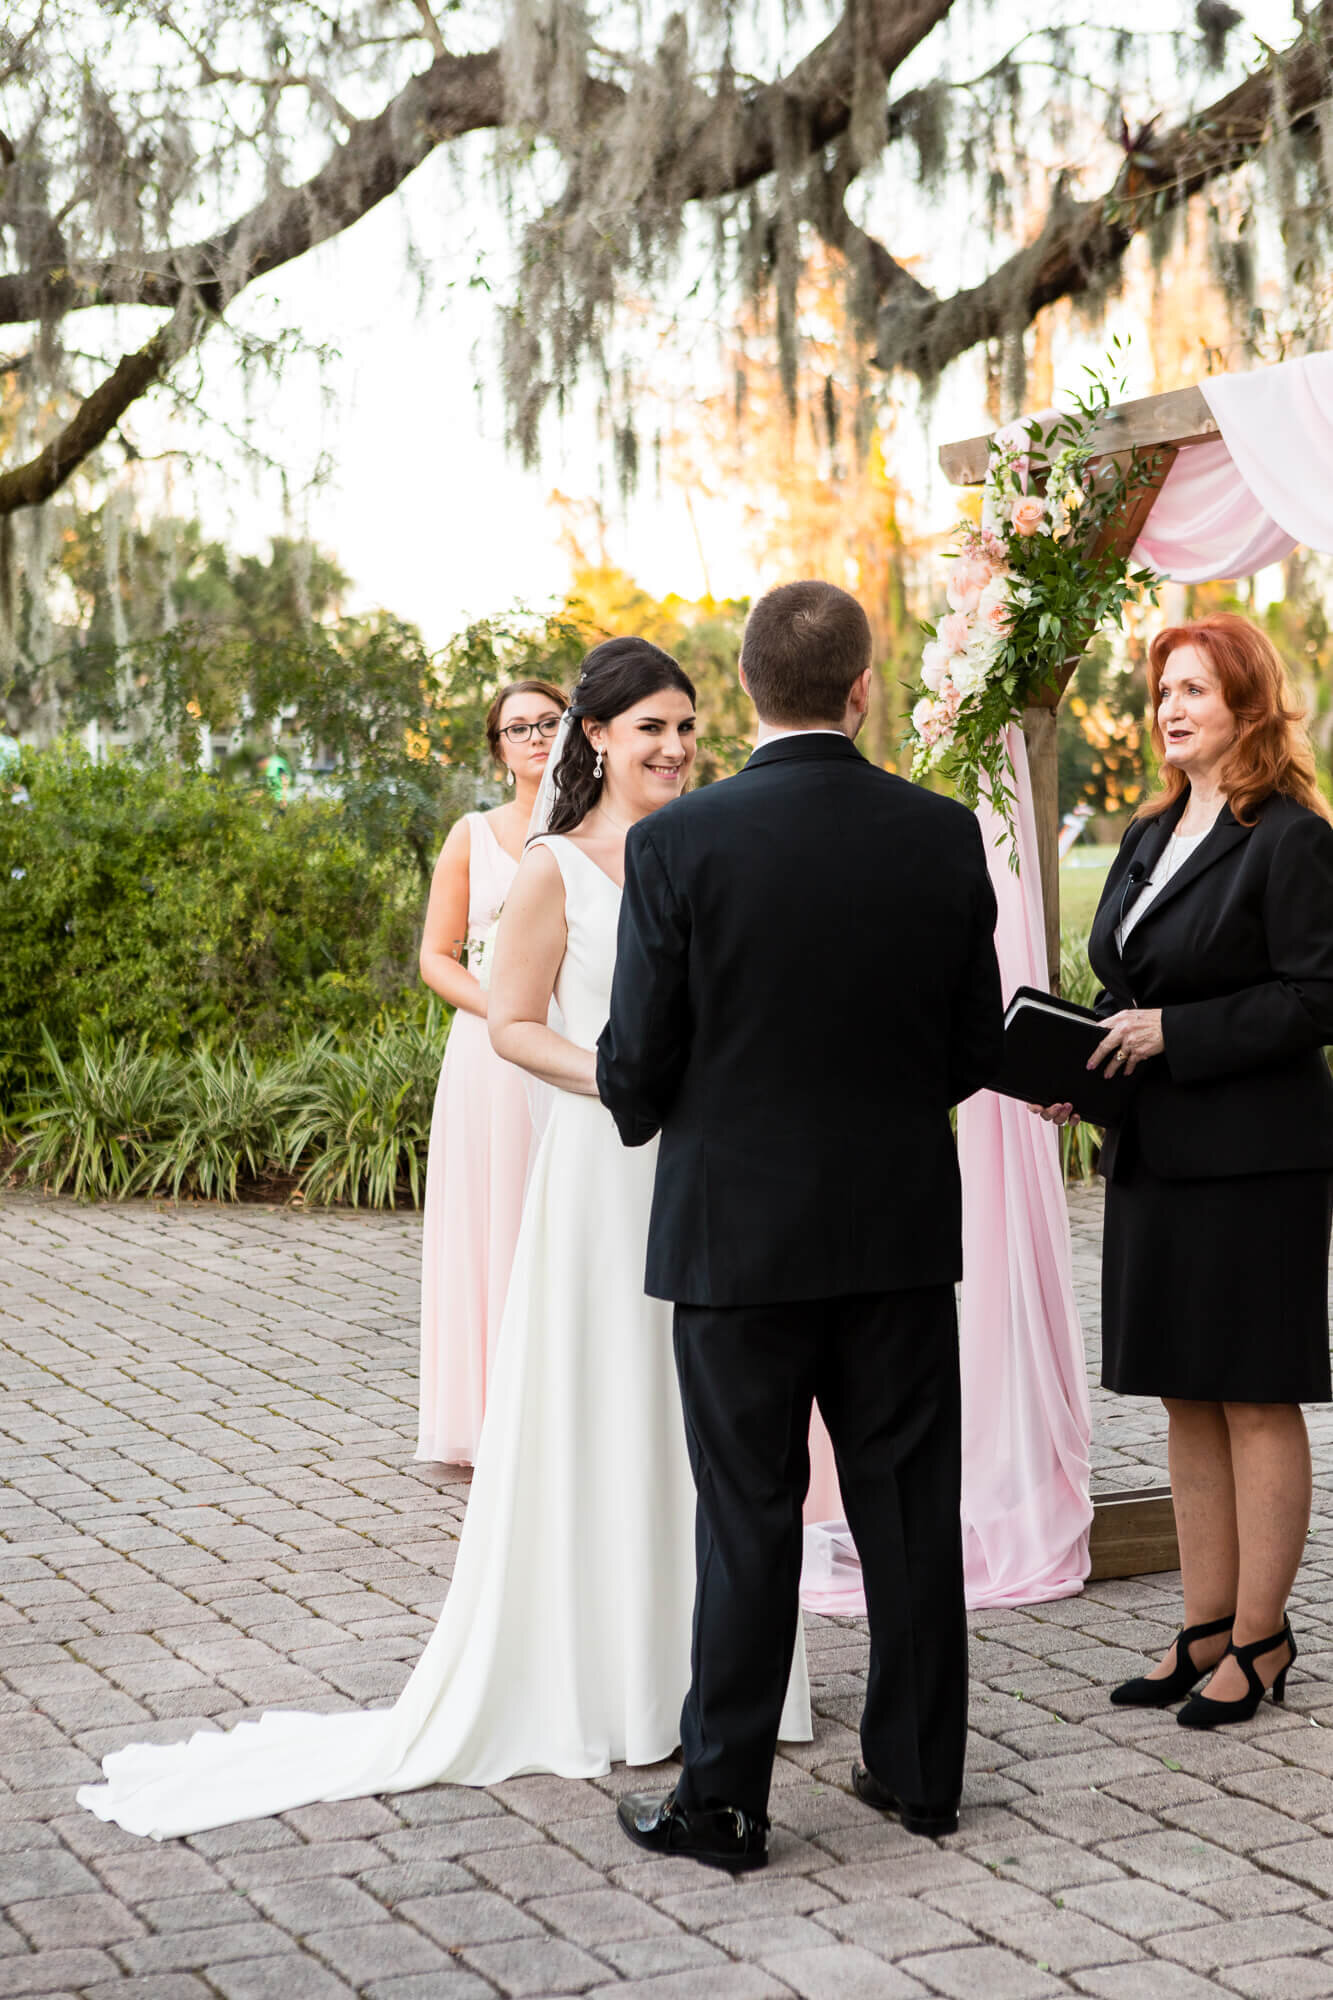  Dubsdread wedding, Orlando, Florida 